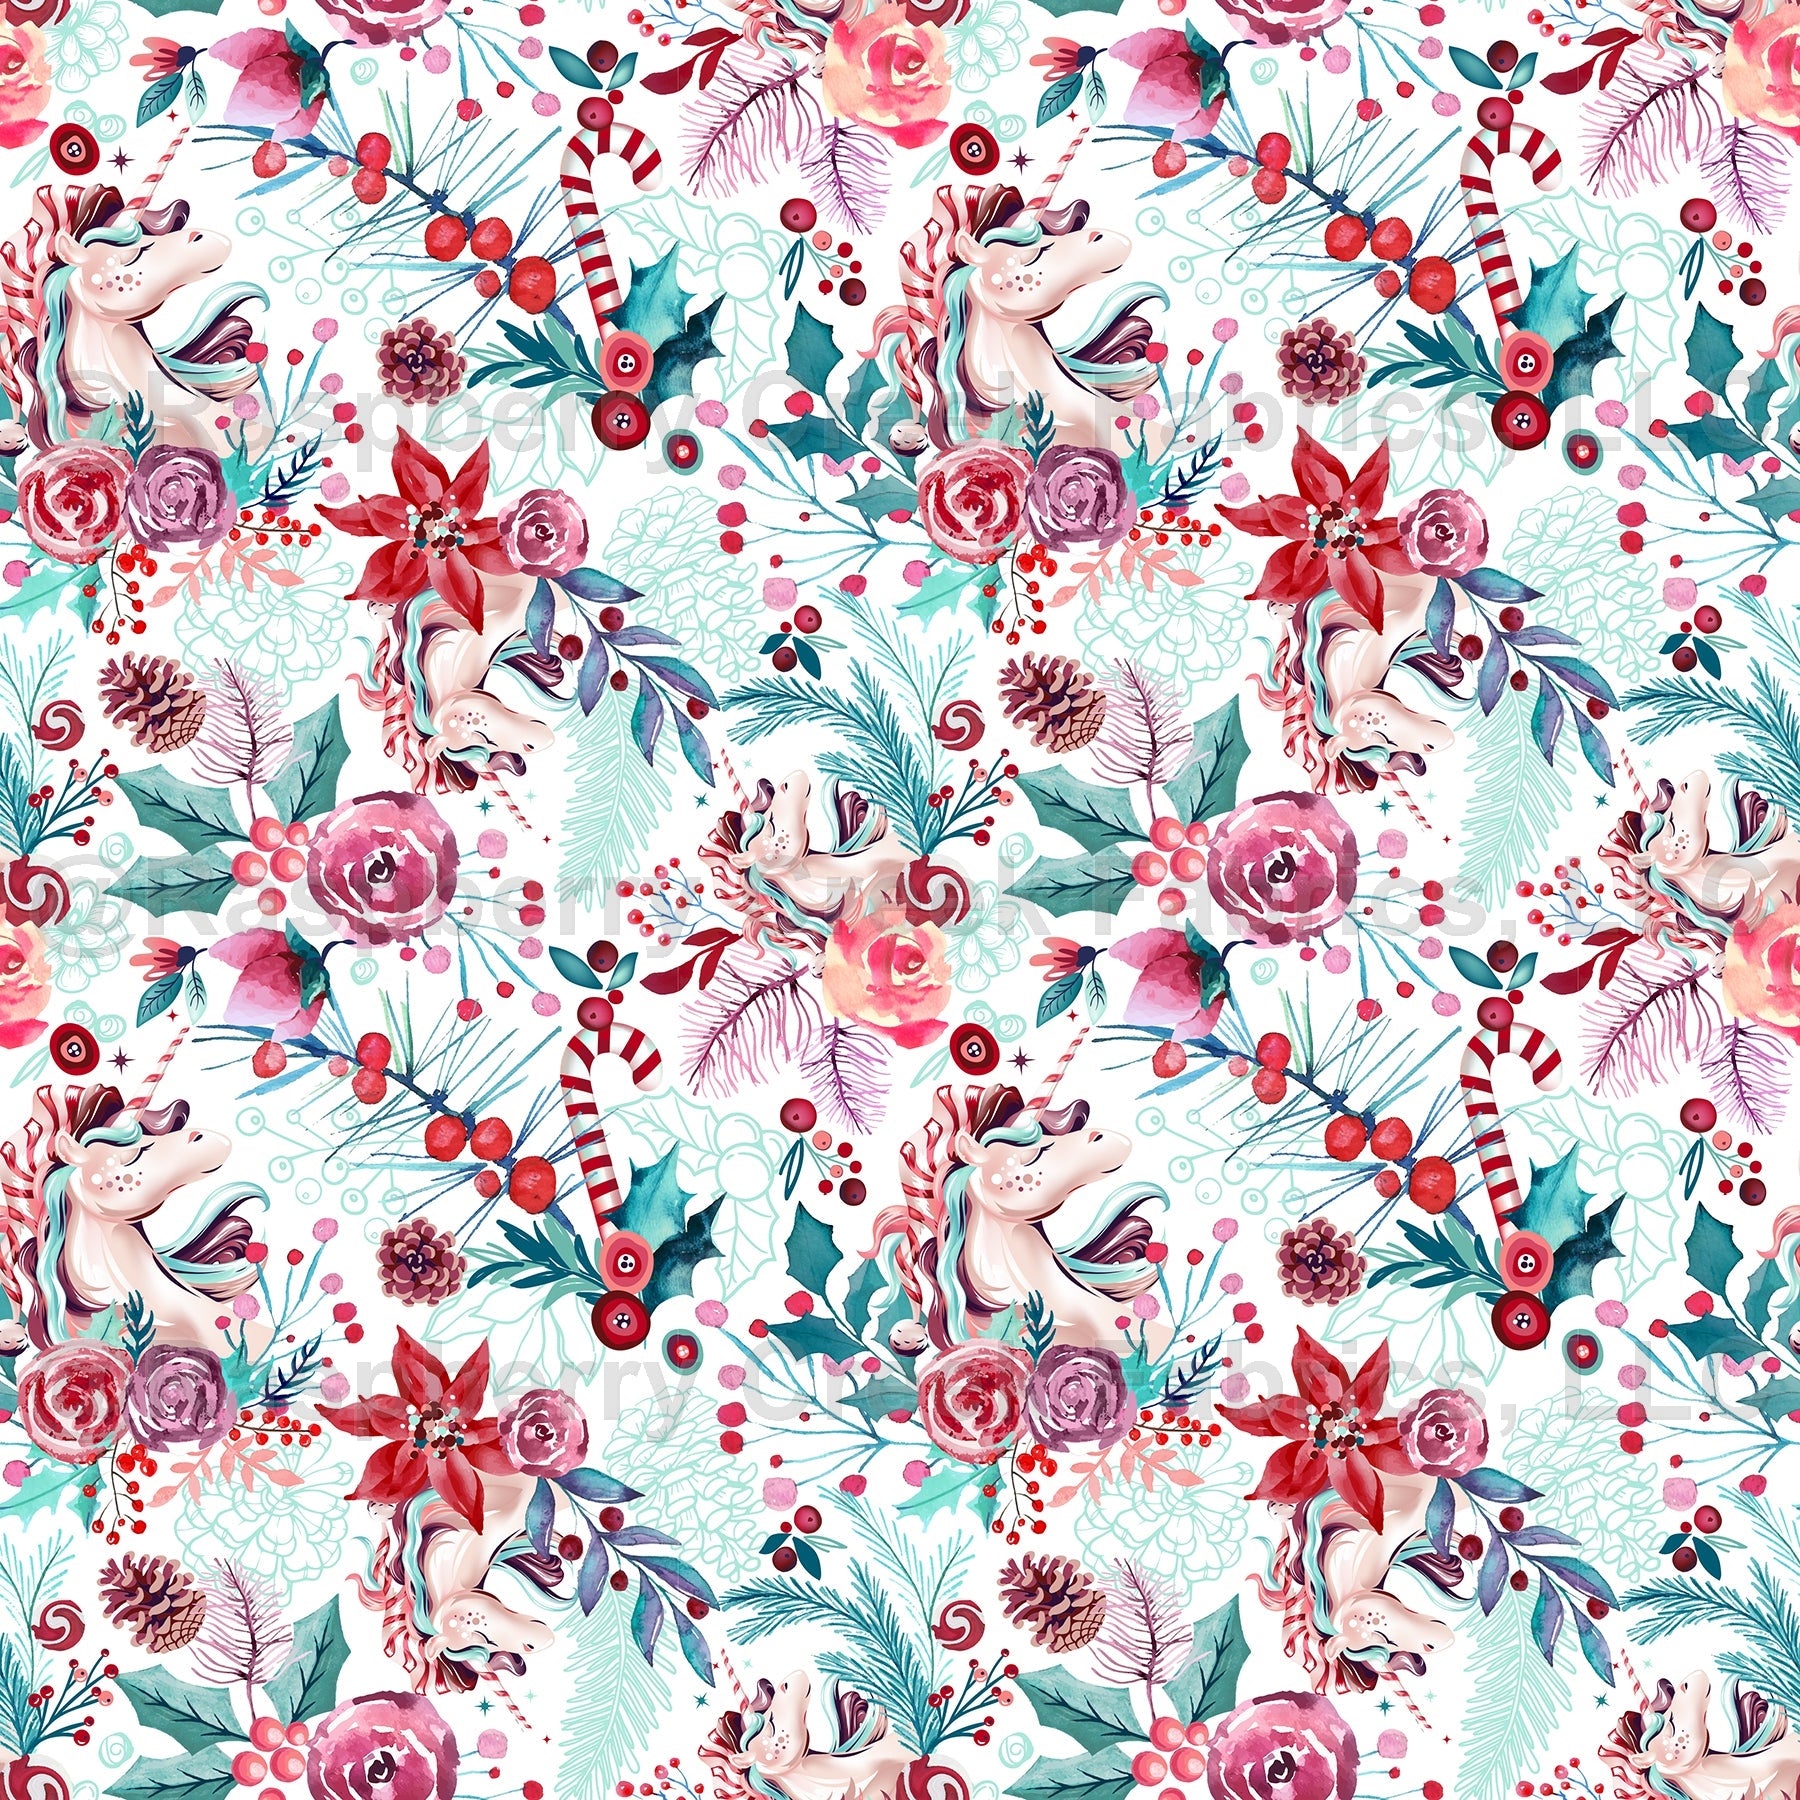 Unicorn Floral - Whimsical Christmas Watercolor Print - Poinsettia Flowers Fabric, Raspberry Creek Fabrics, watermarked